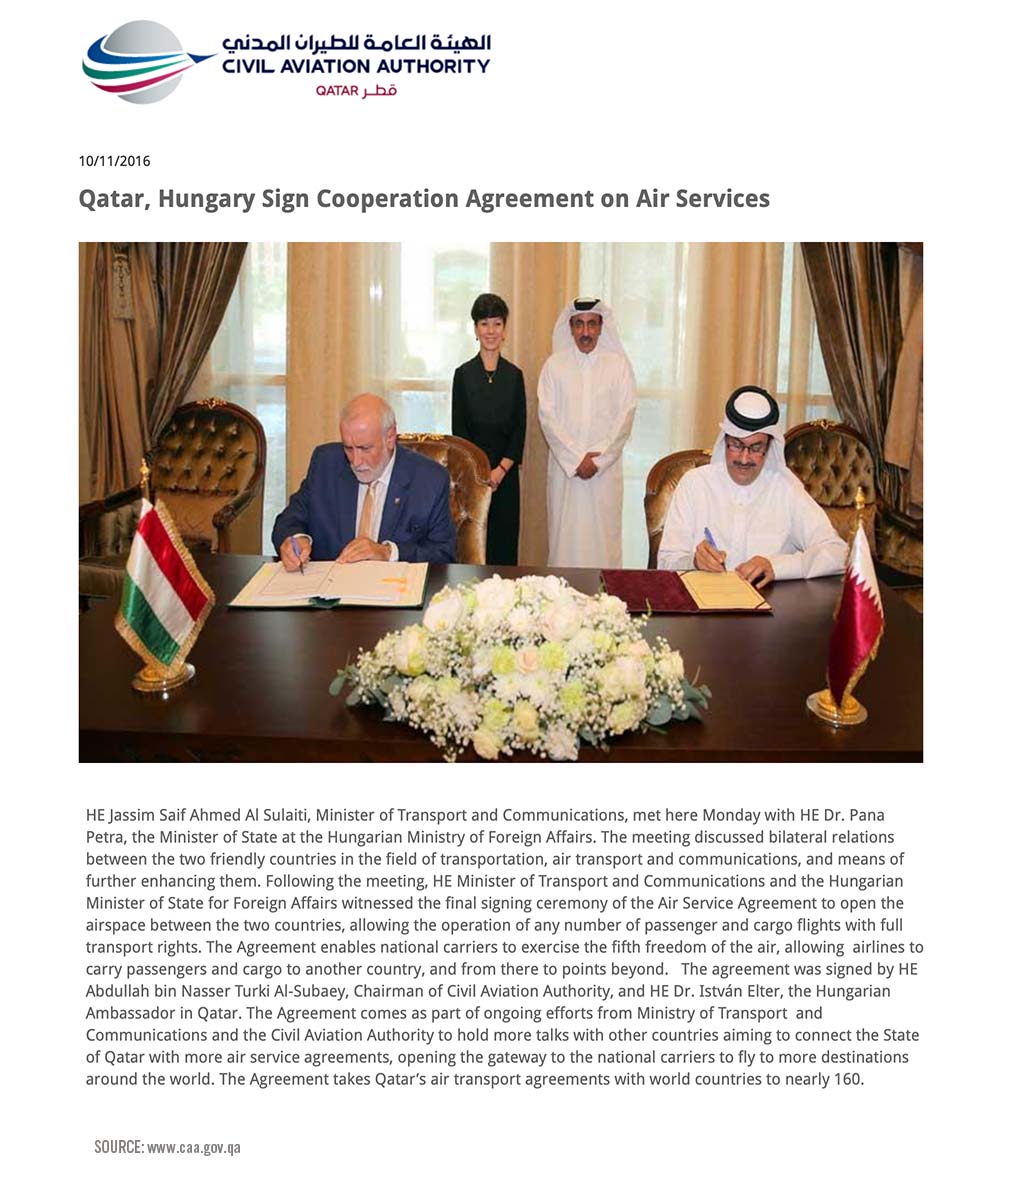 Qatar-Hungary agreement